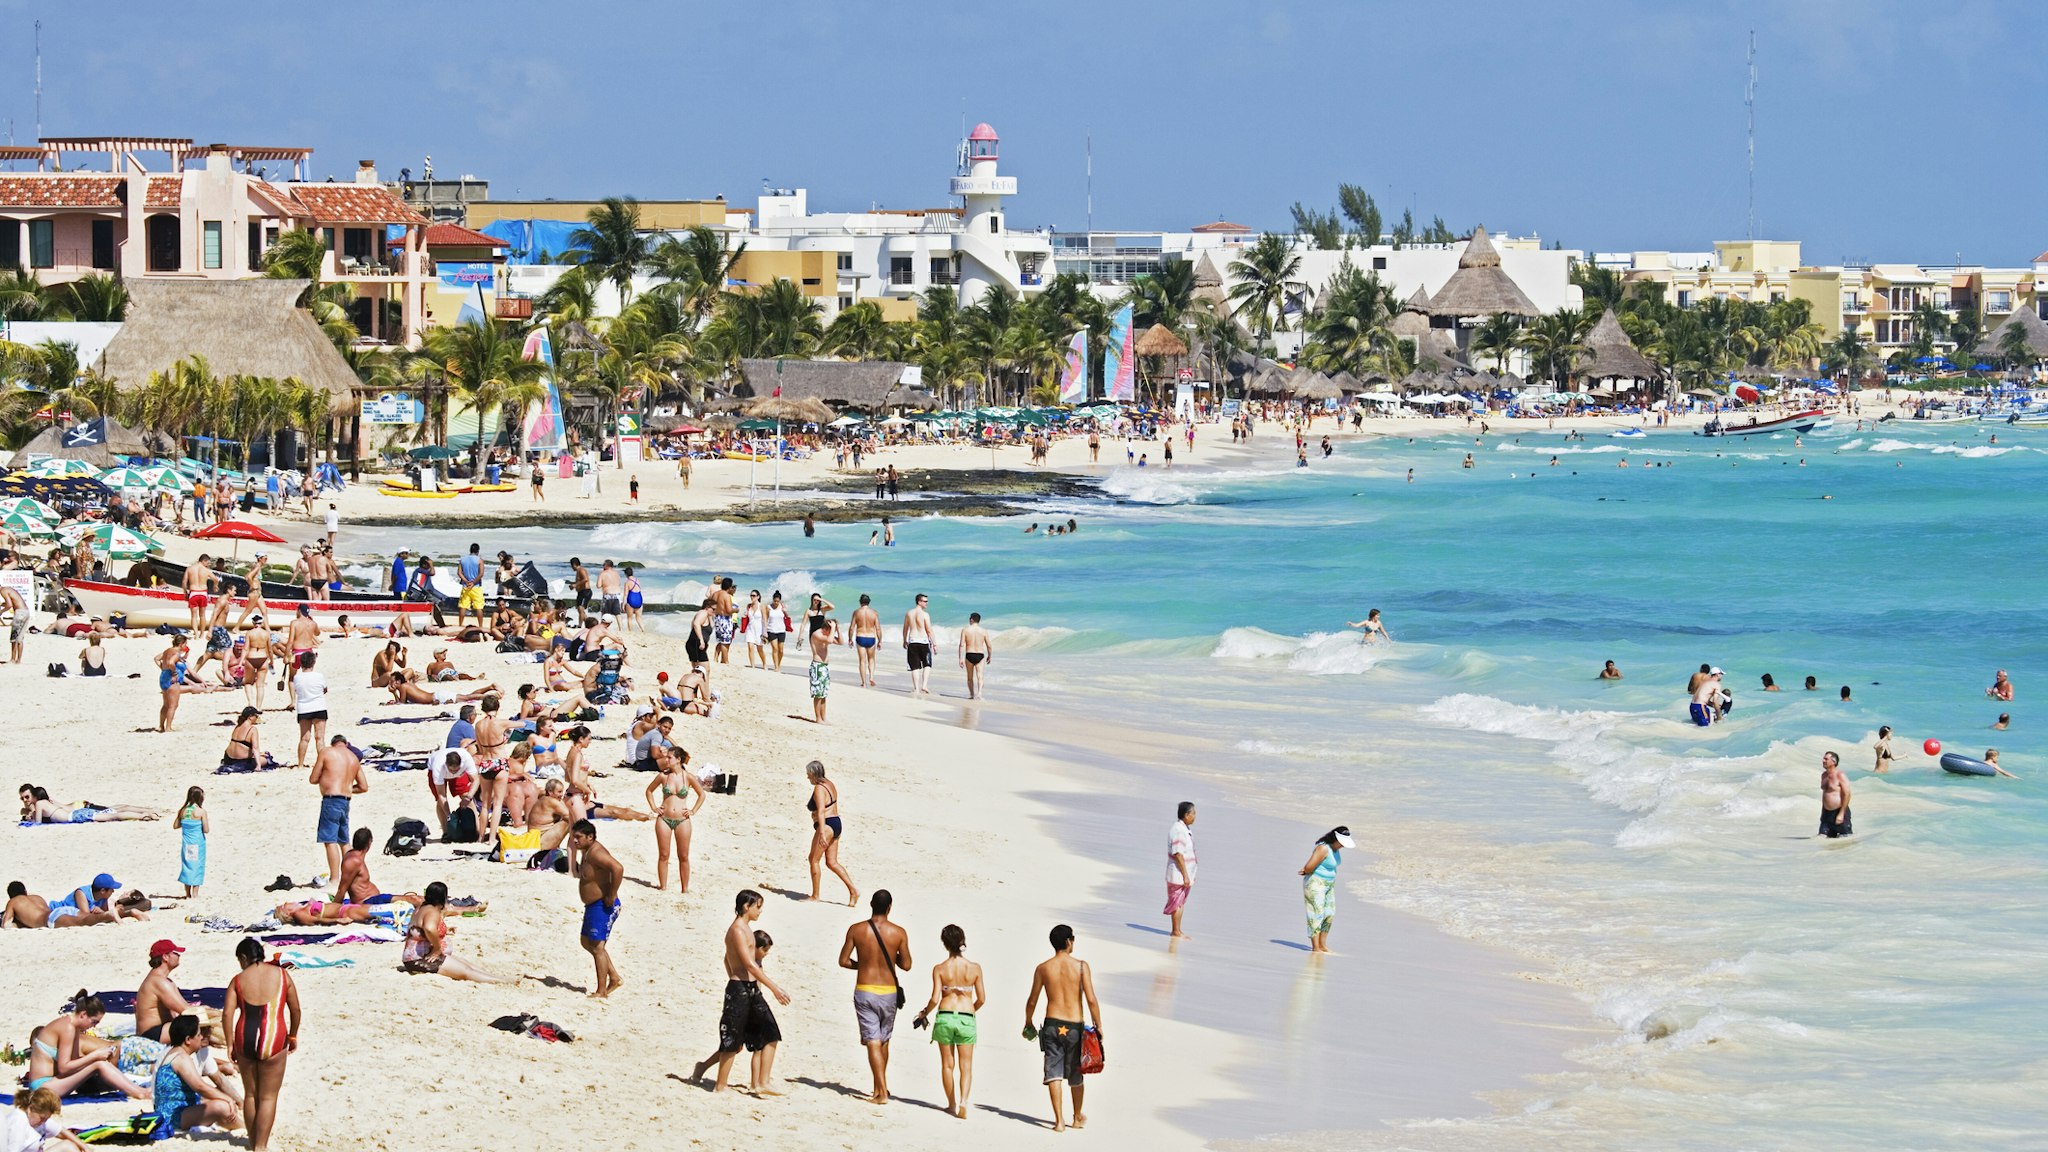 Beach in Playa del Carmen - stock photo